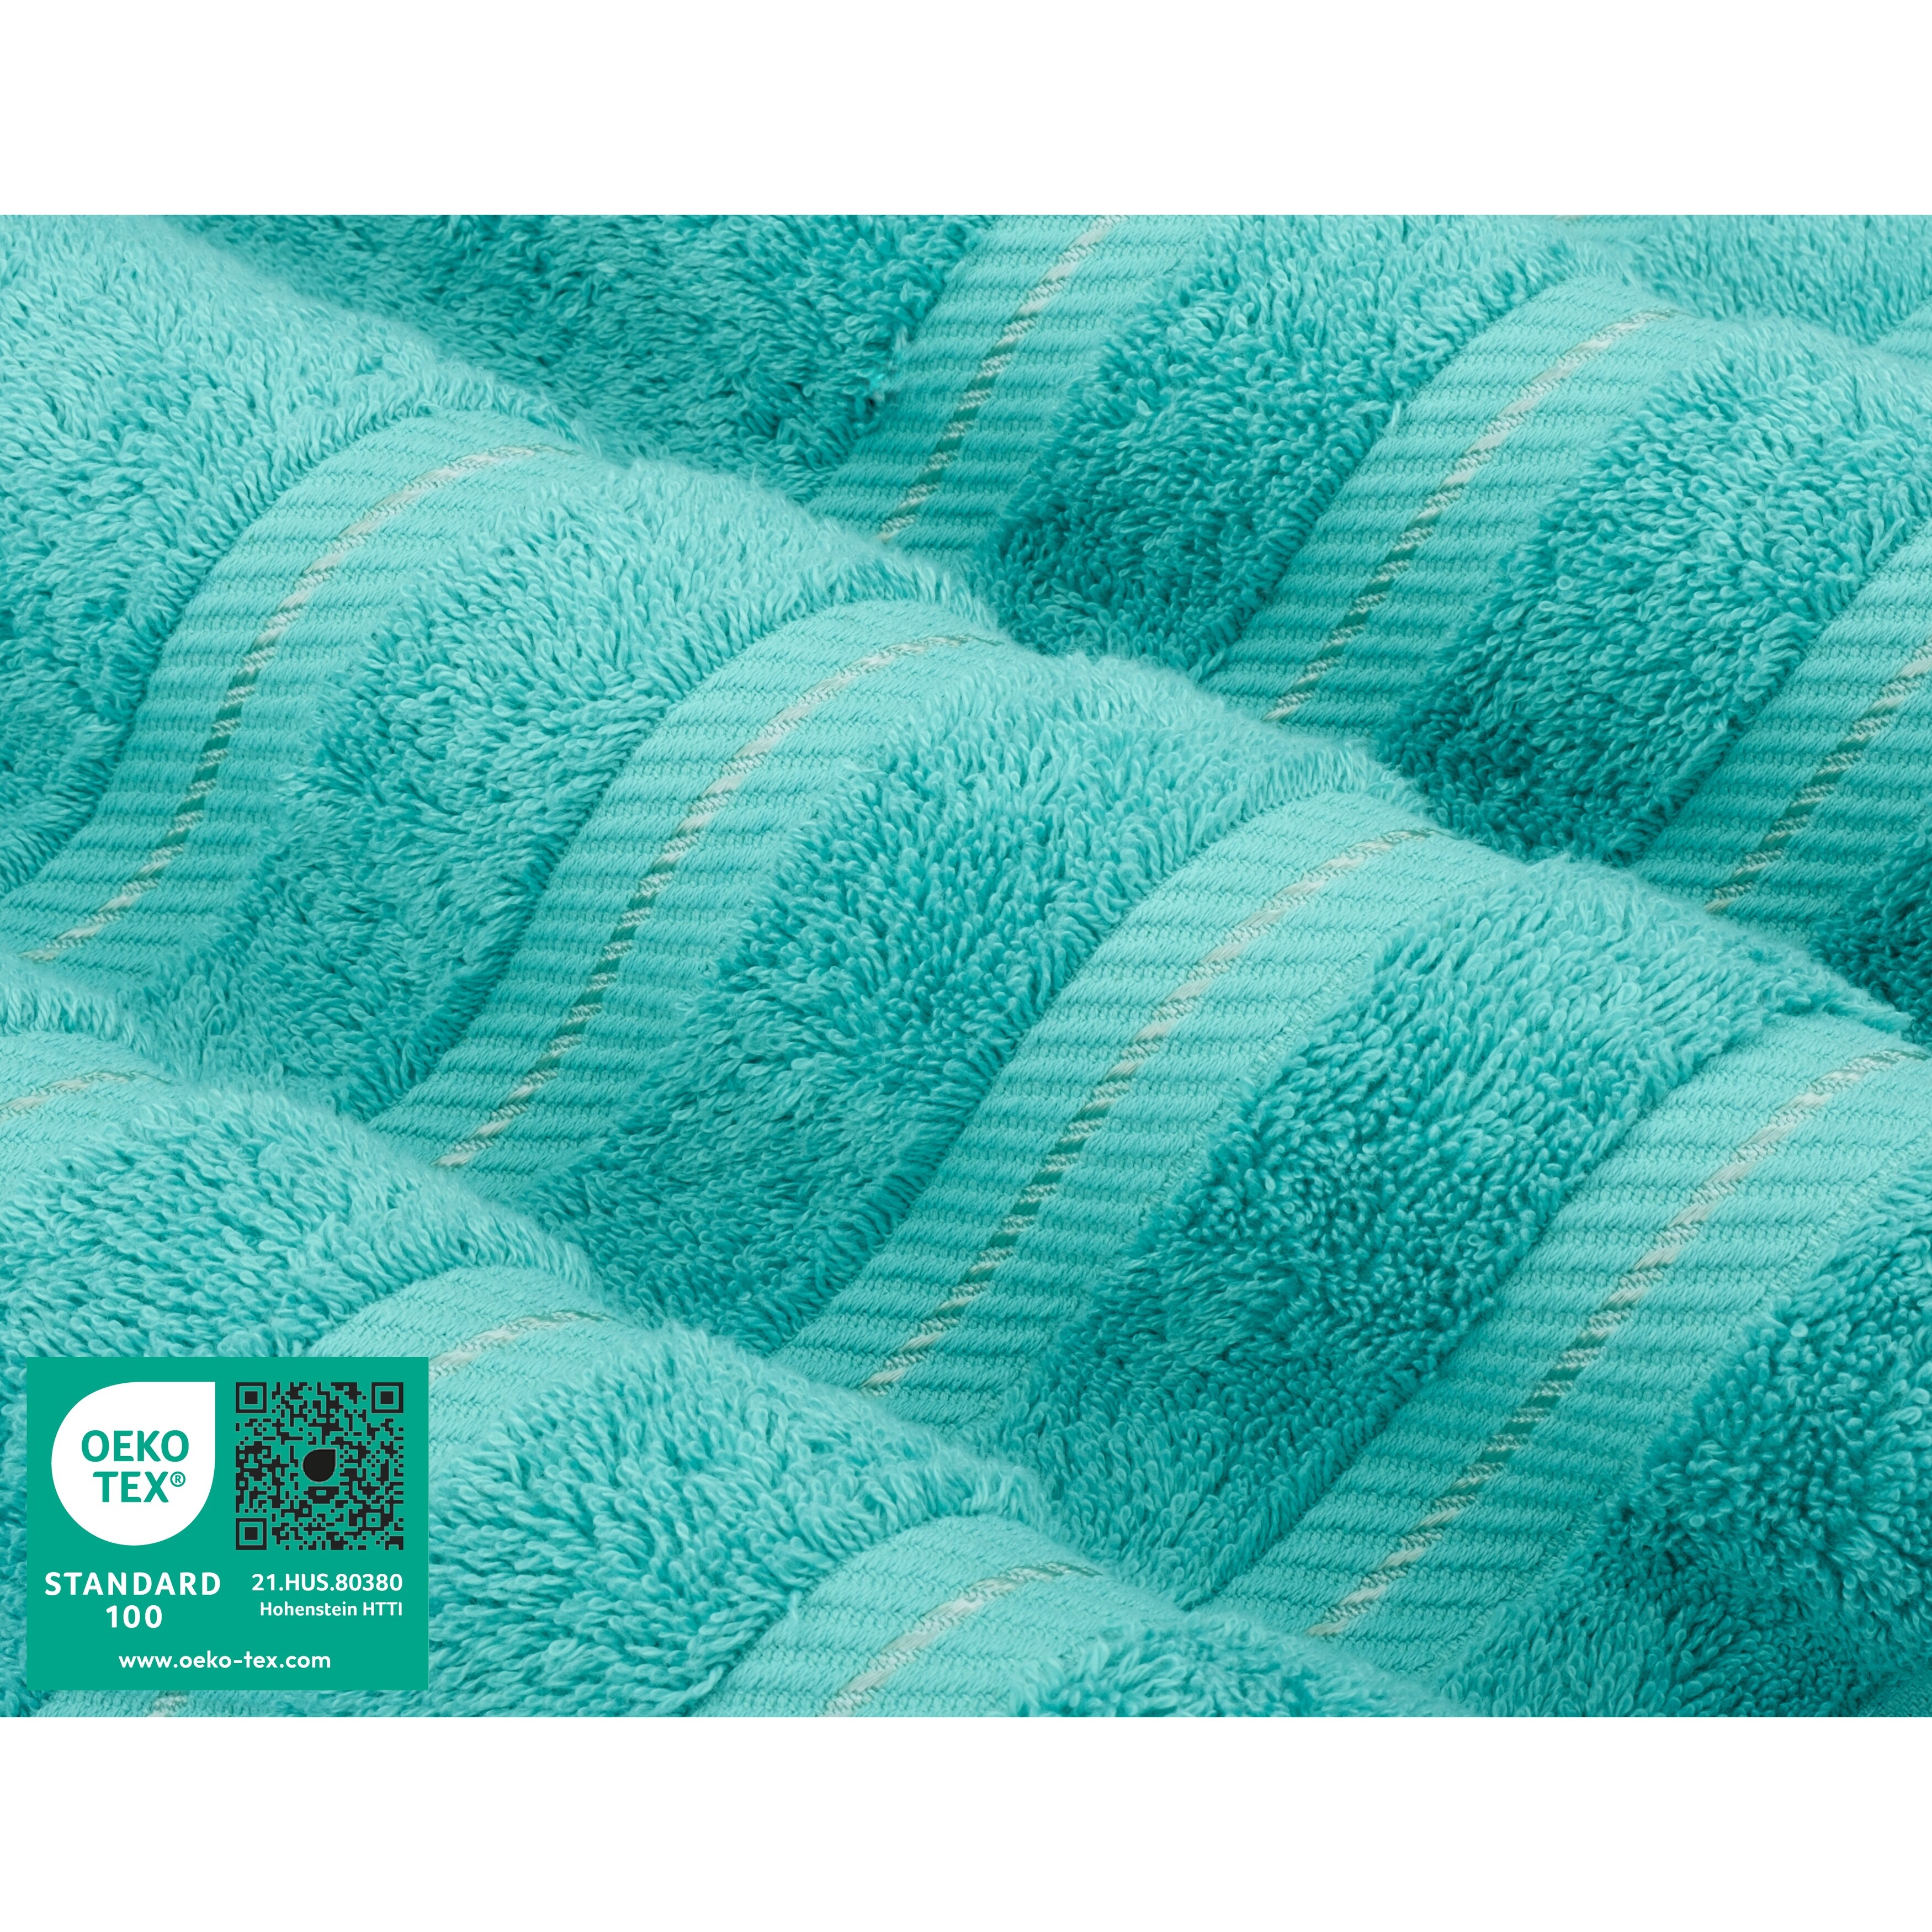 American Soft Linen Bath Towel Set, 4 Piece 100% Turkish Cotton Bath Towels,  27x54 inches Super Soft Towels for Bathroom, Sage Green Edis4BathTurqE130 -  The Home Depot